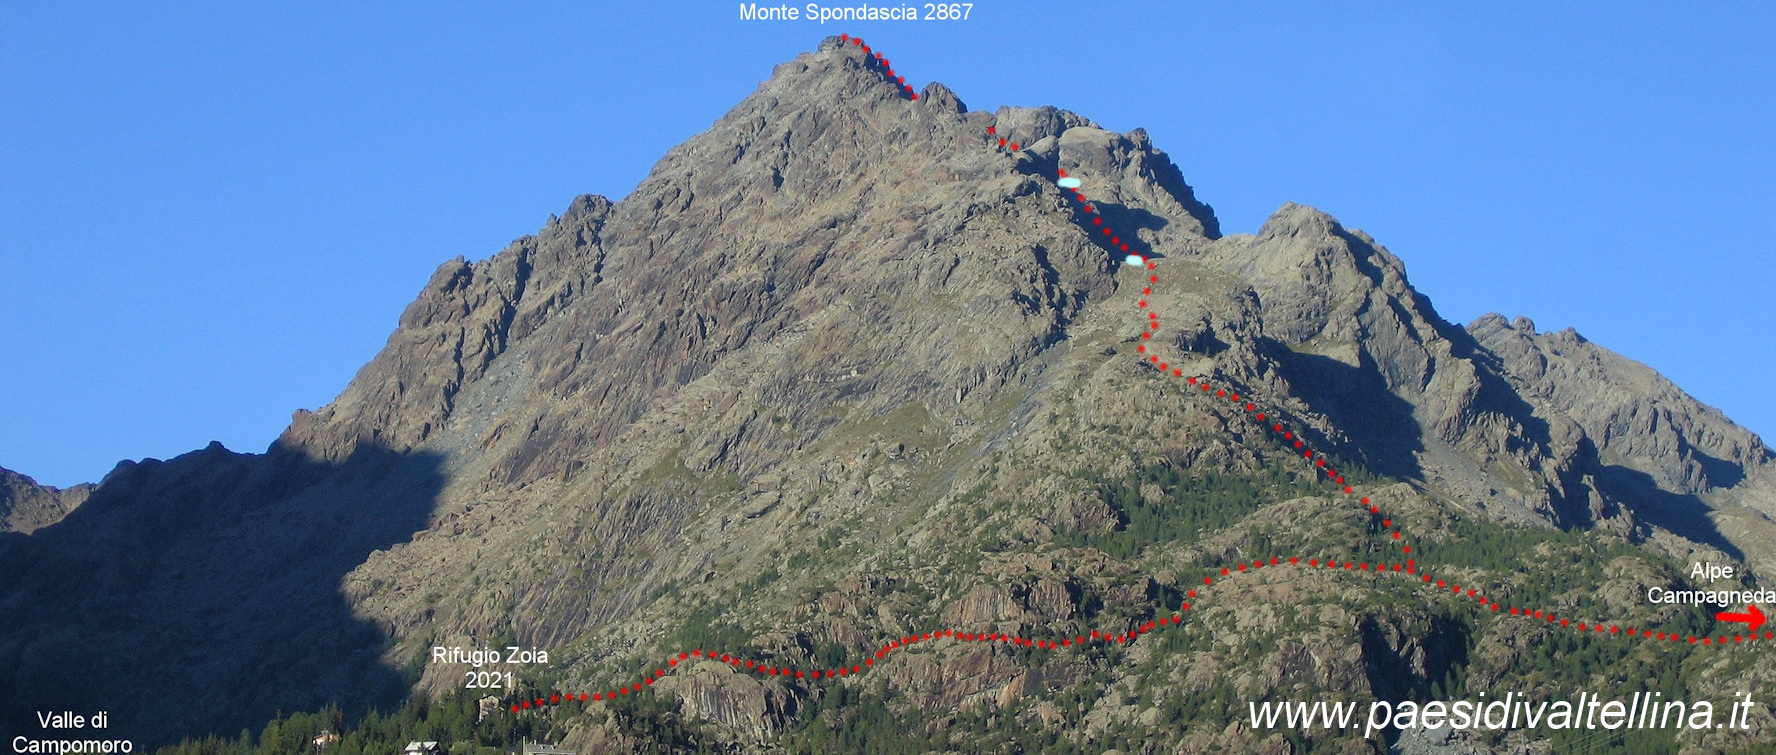 Cima Monte Spondascia (2867 m)